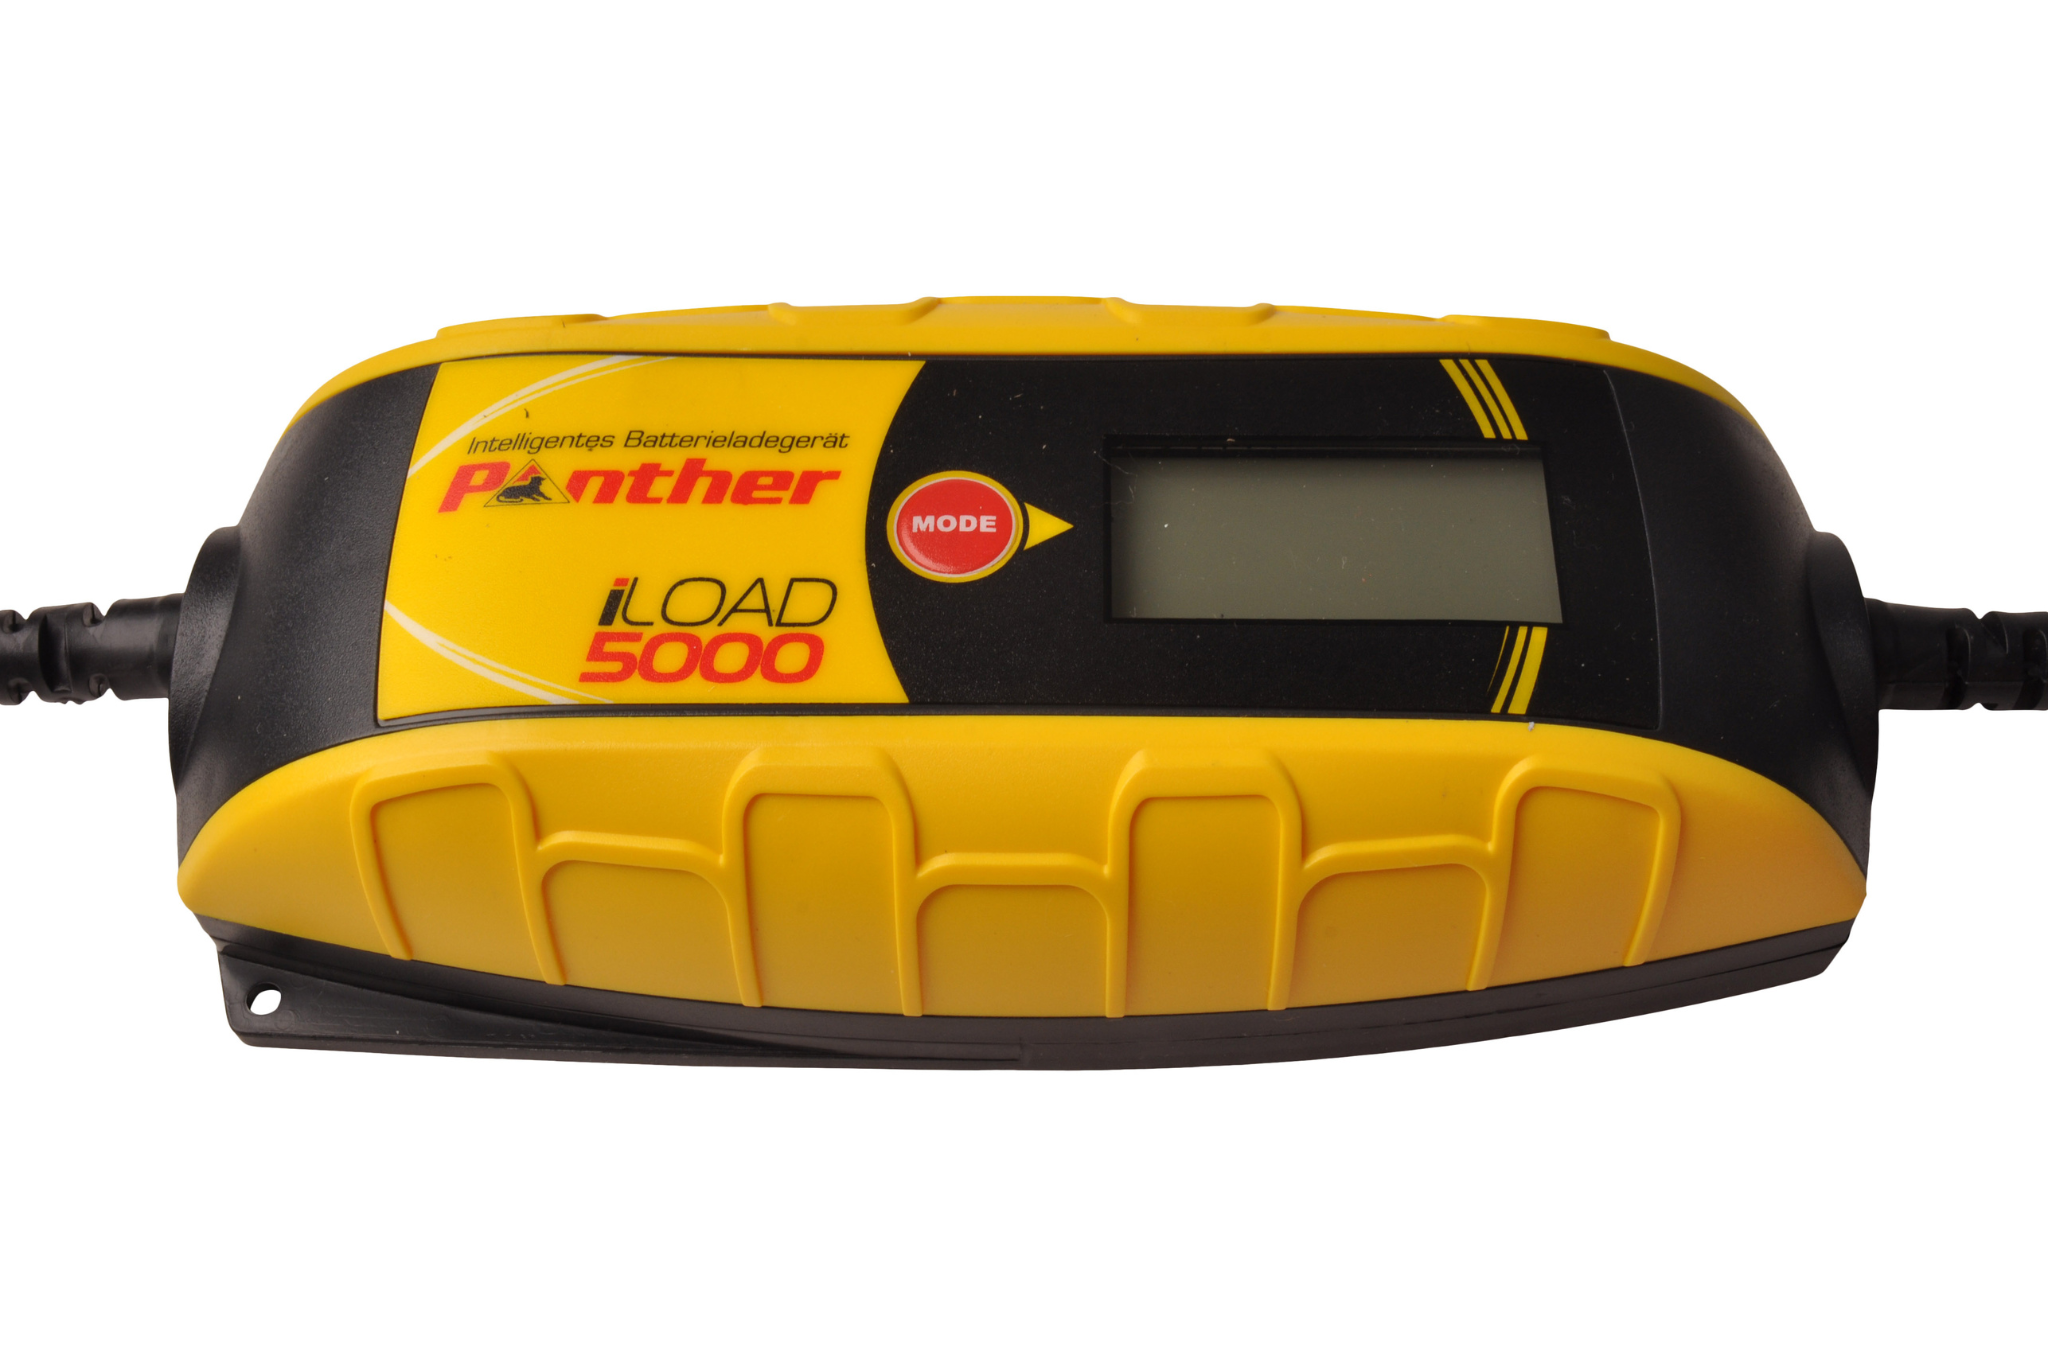 Erhaltungsladegerät/Batterieladegerät für Auto, Motorrad